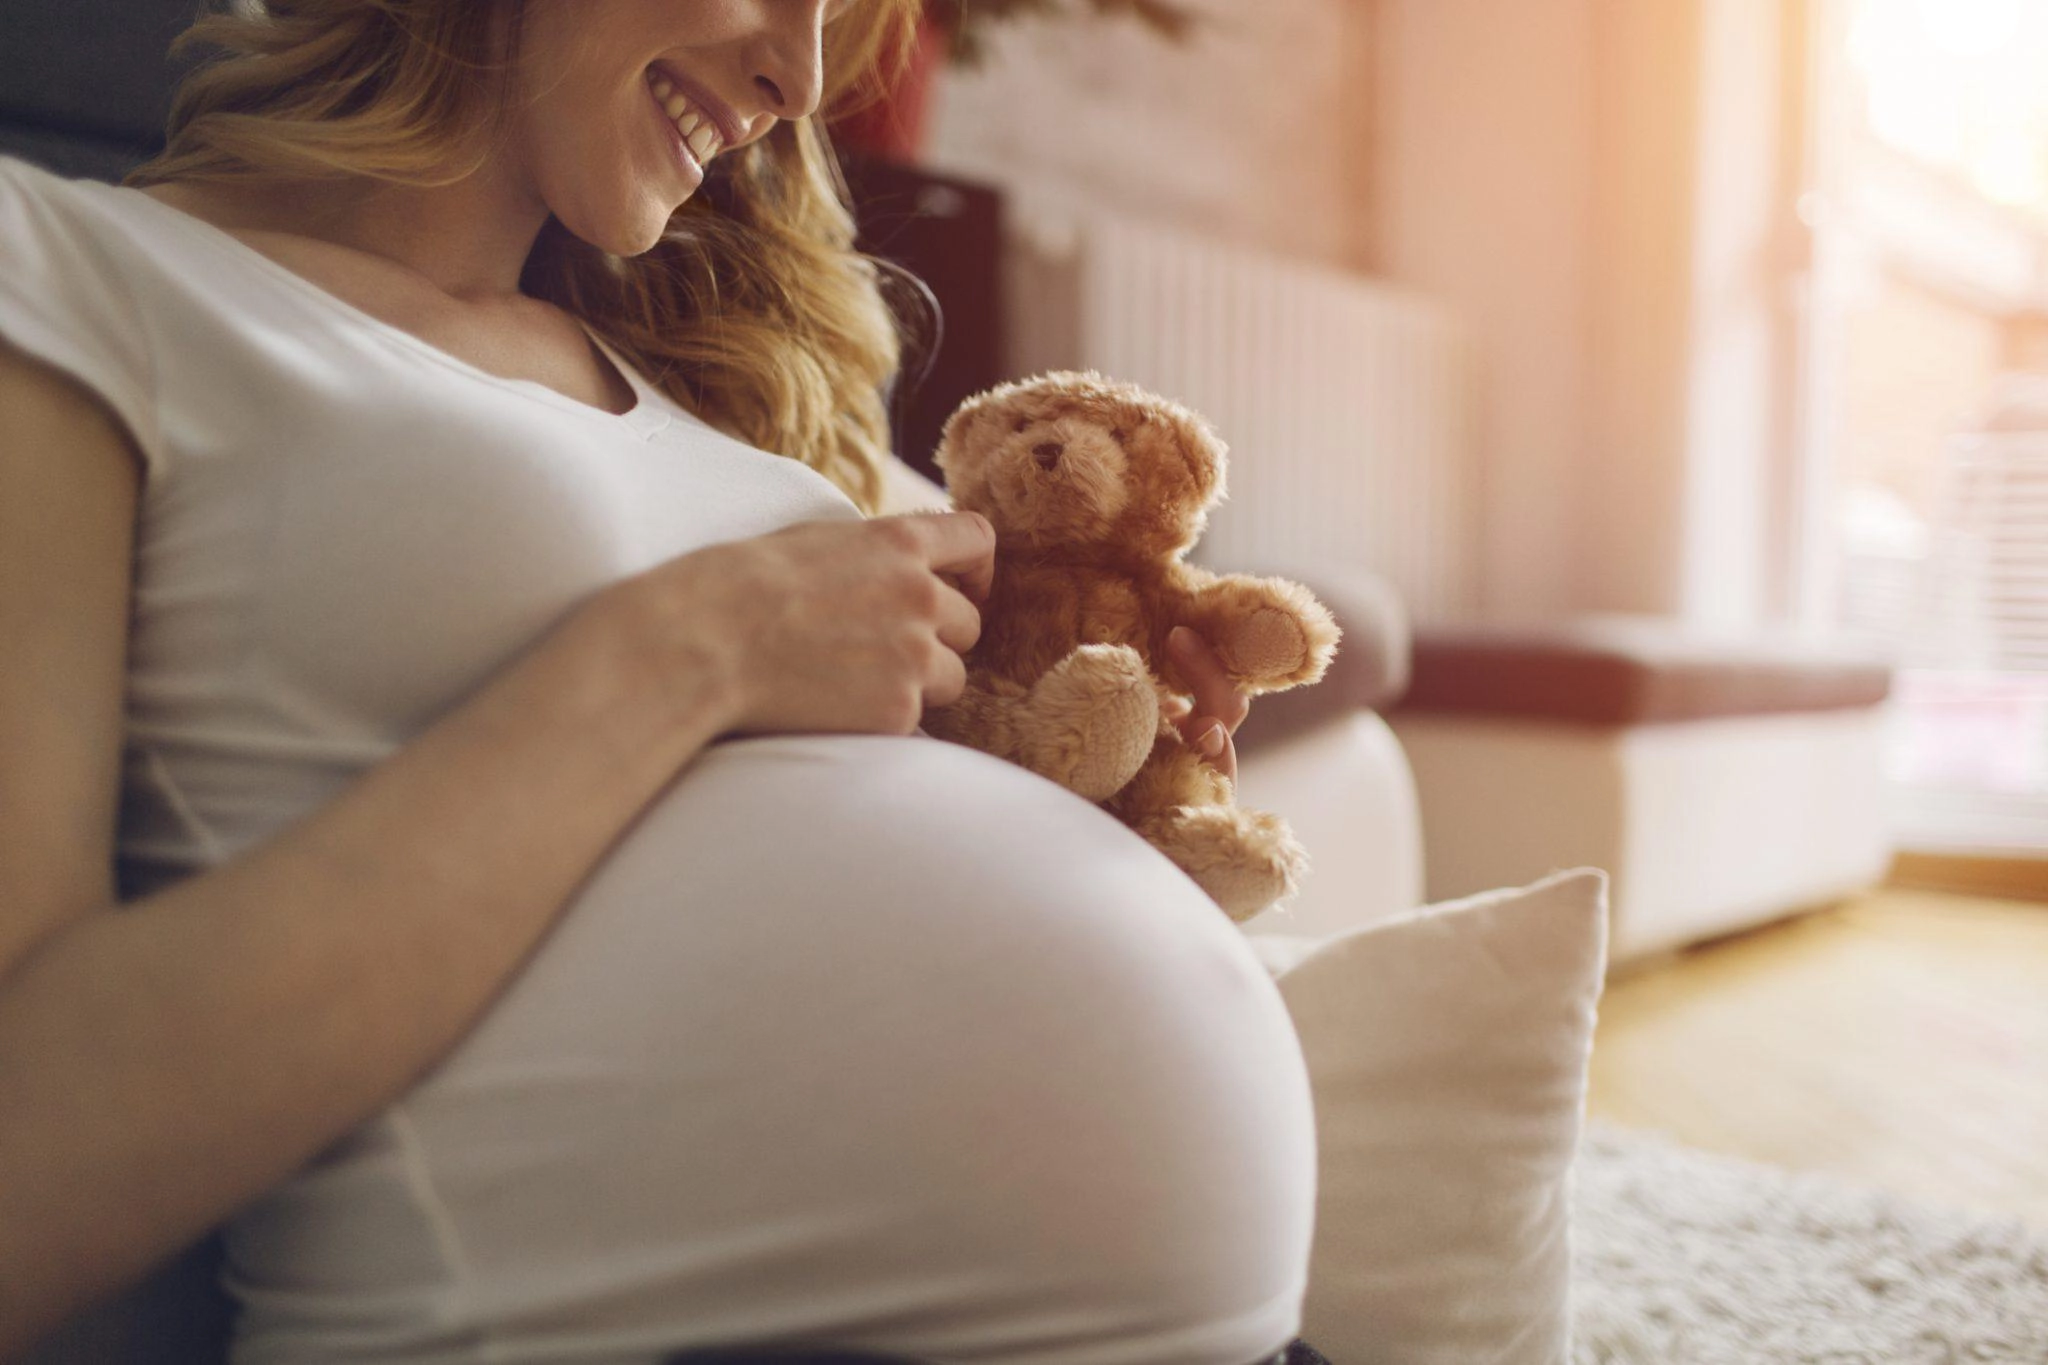 Surrogate mothers in Ukraine